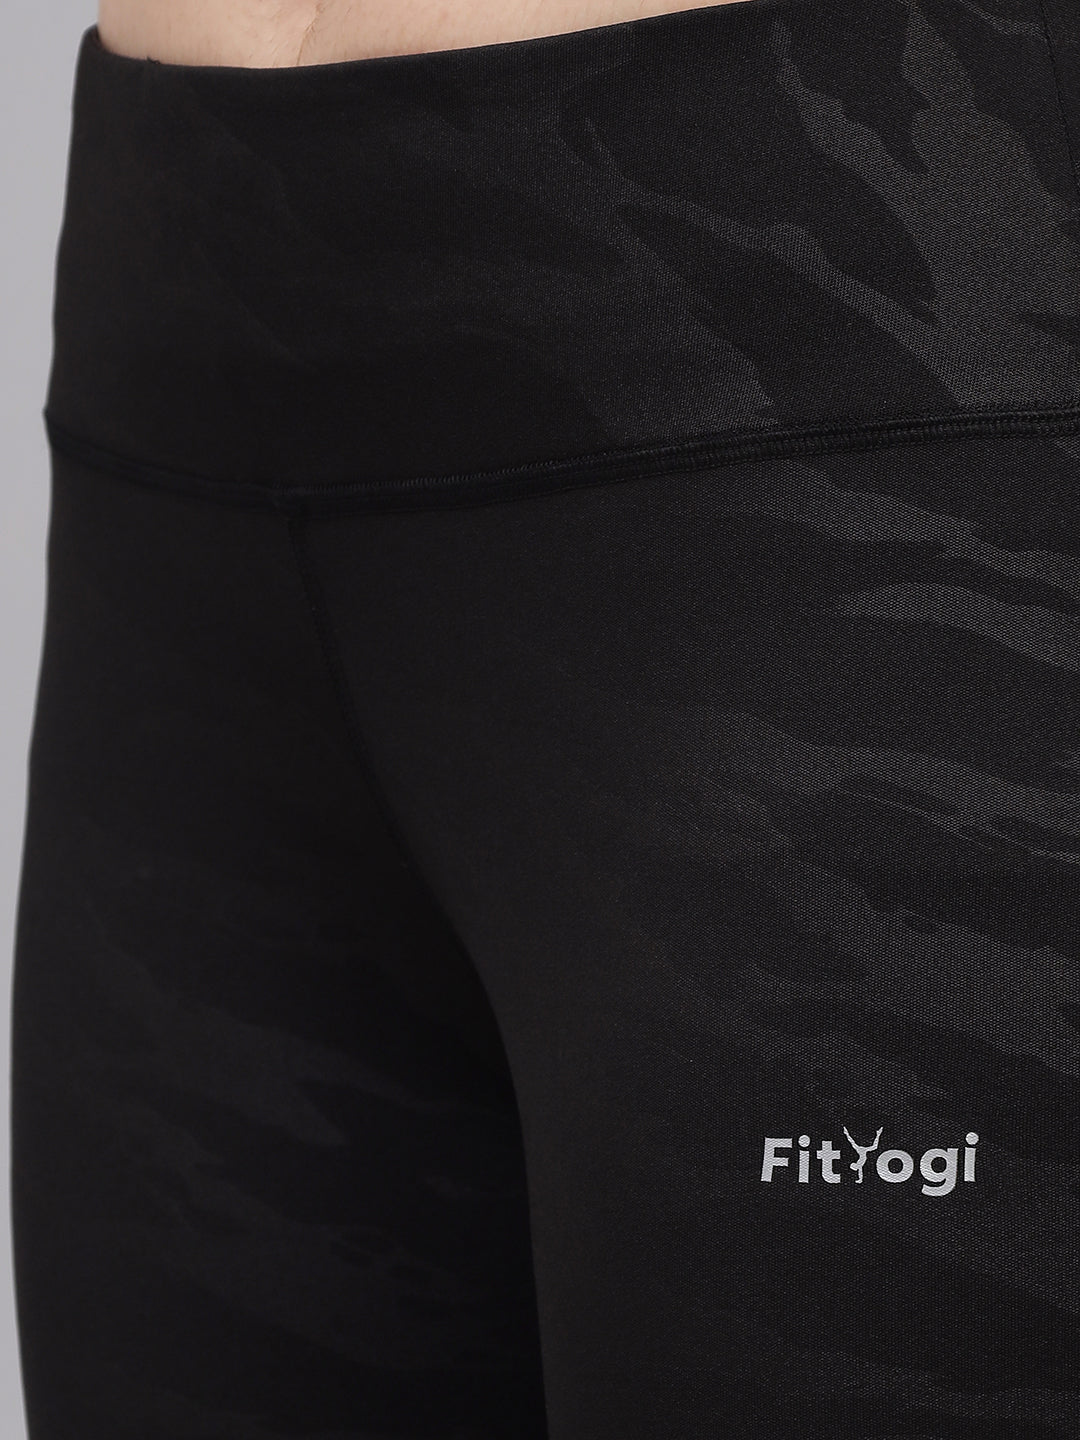 Black Camouflage High Waist Gym Wear/Yoga Wear Ankle Length Leggings